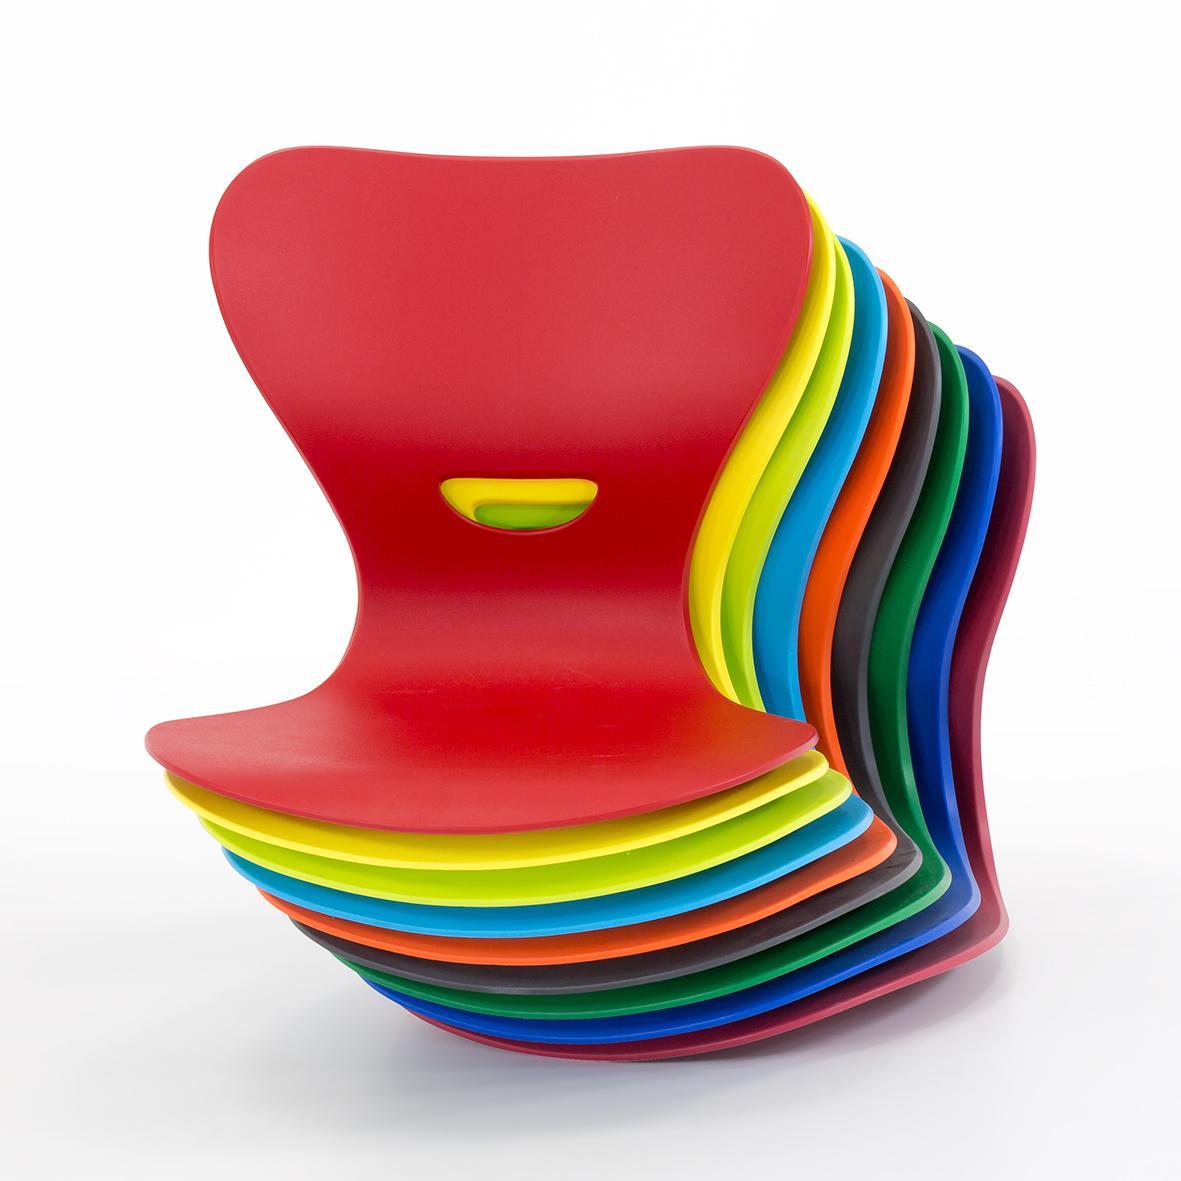 Mehrzweckstuhl stapelbar mit Sitzschale aus Kunststoff